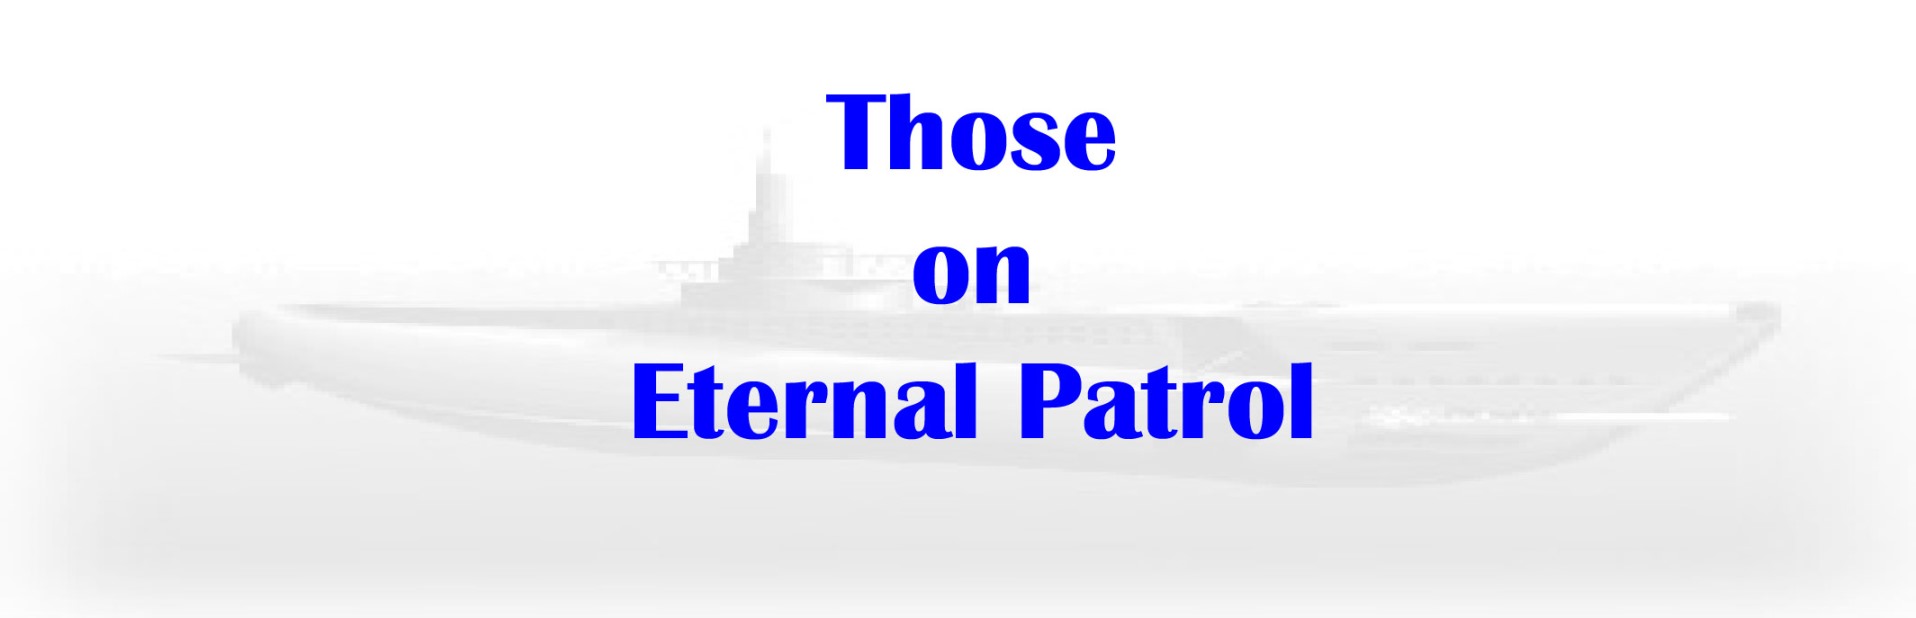 Those on Eternal Patrol